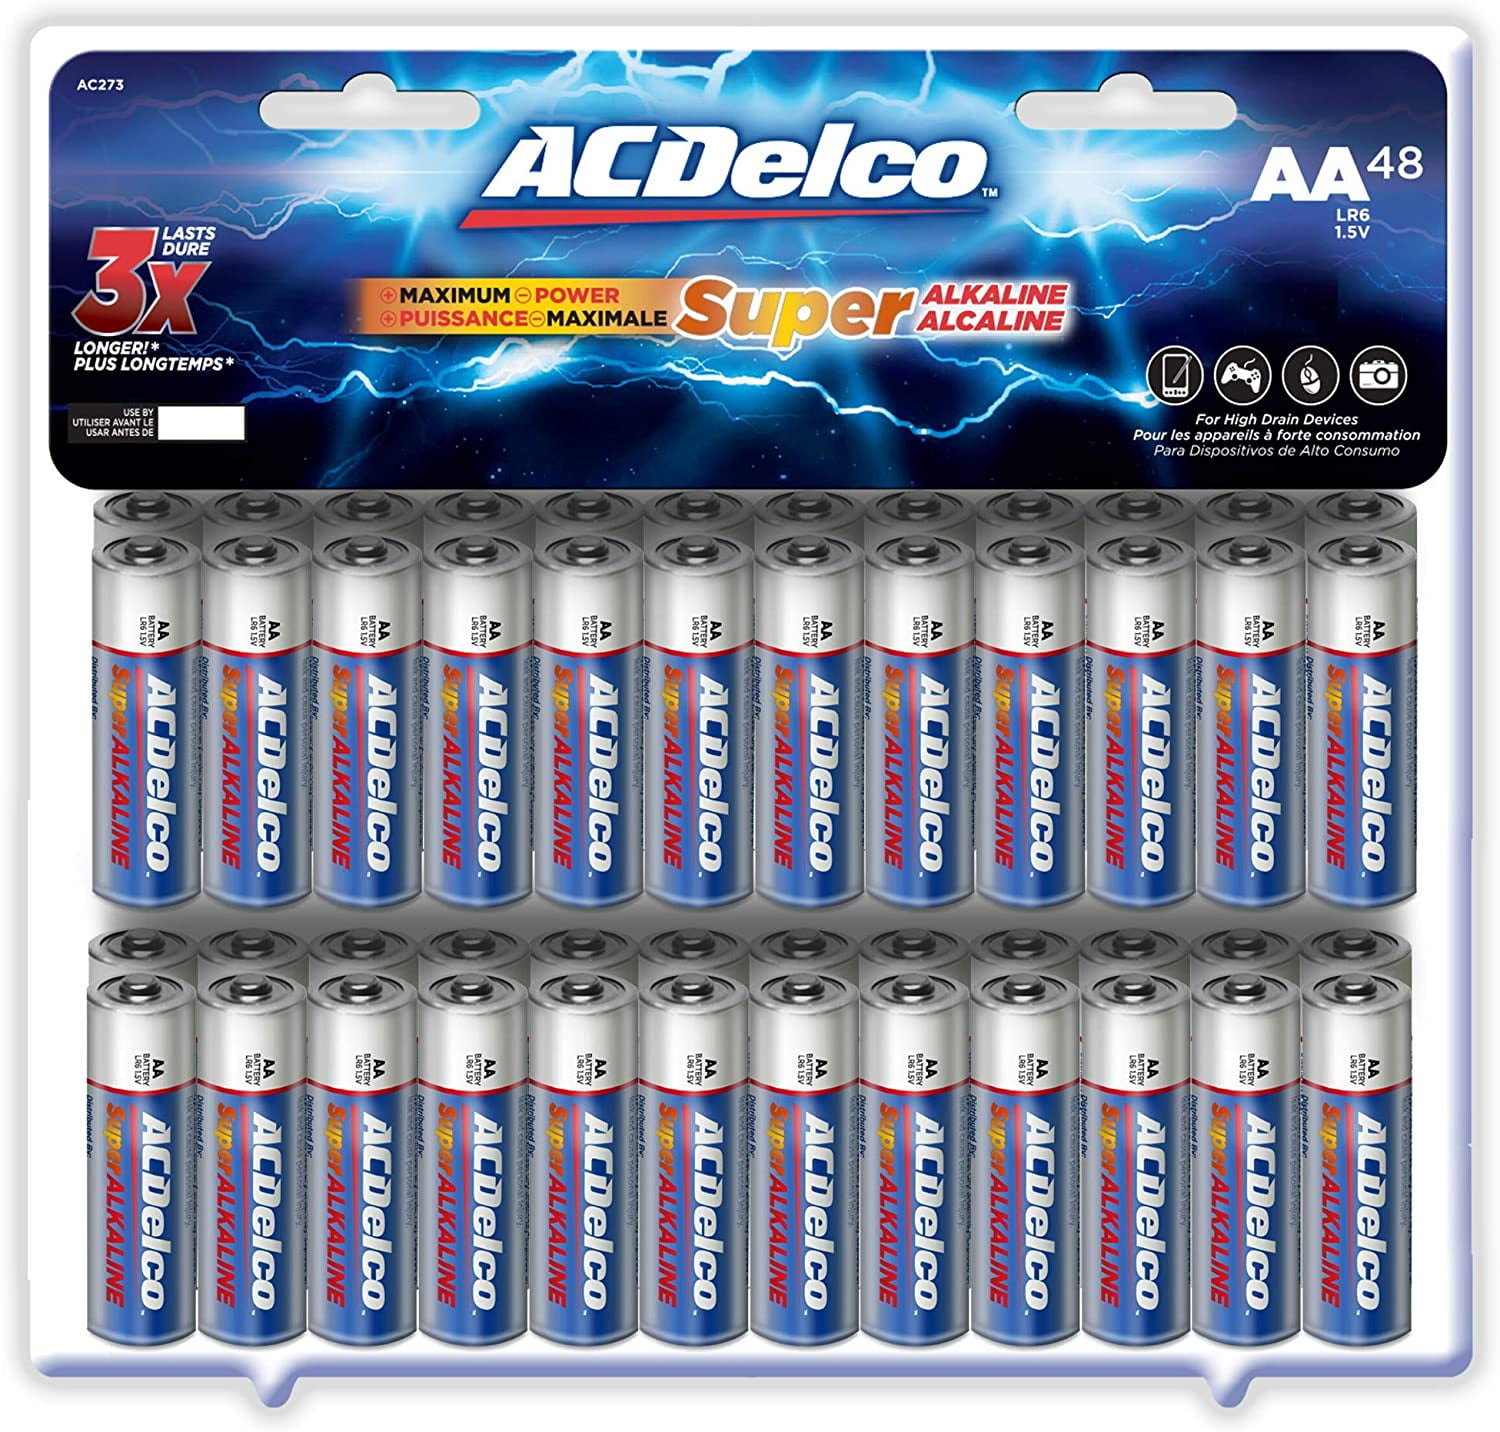 Super alkaline batteries. Battery super Alkaline AA. Алкалайн батарейки. Супер алкалин. Свечи Alkaline для авто.